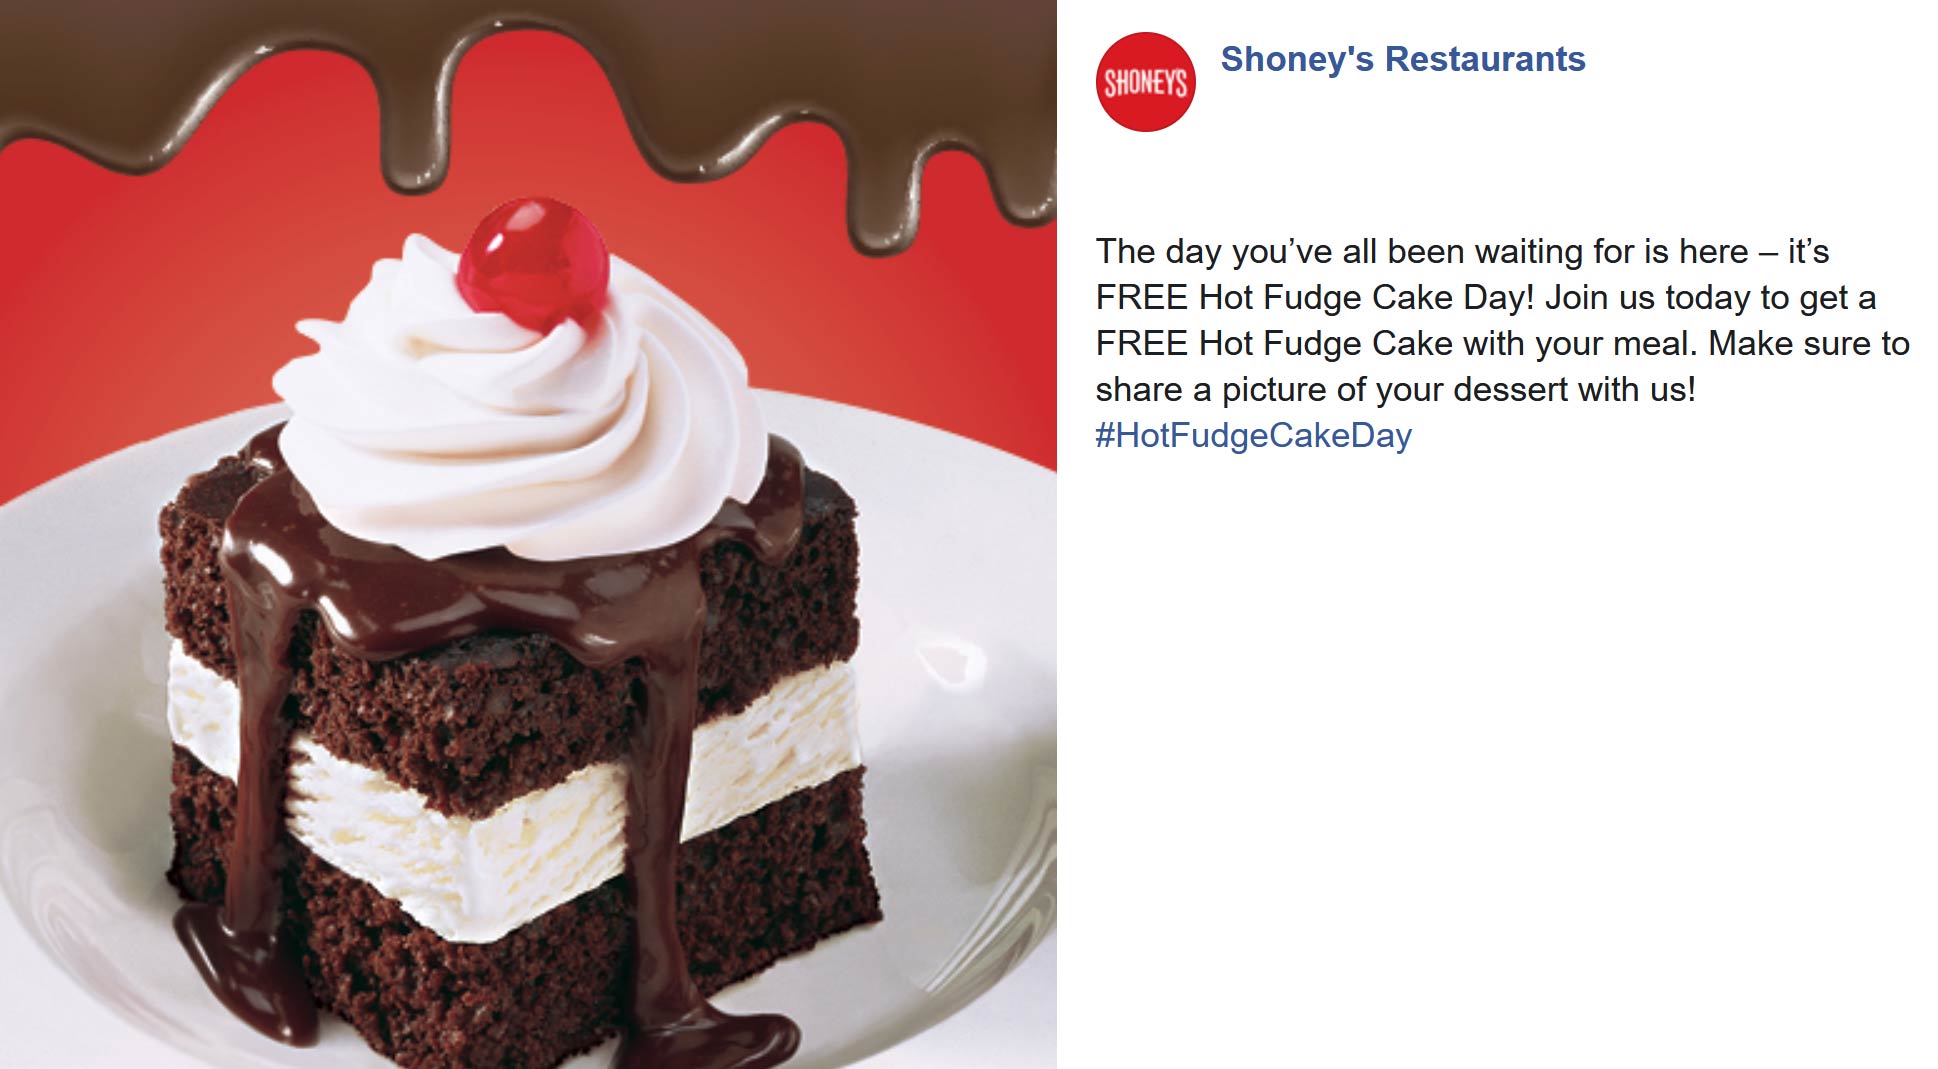 Shoneys restaurants Coupon  Free hot fudge cake today at Shoneys restaurants #shoneys 